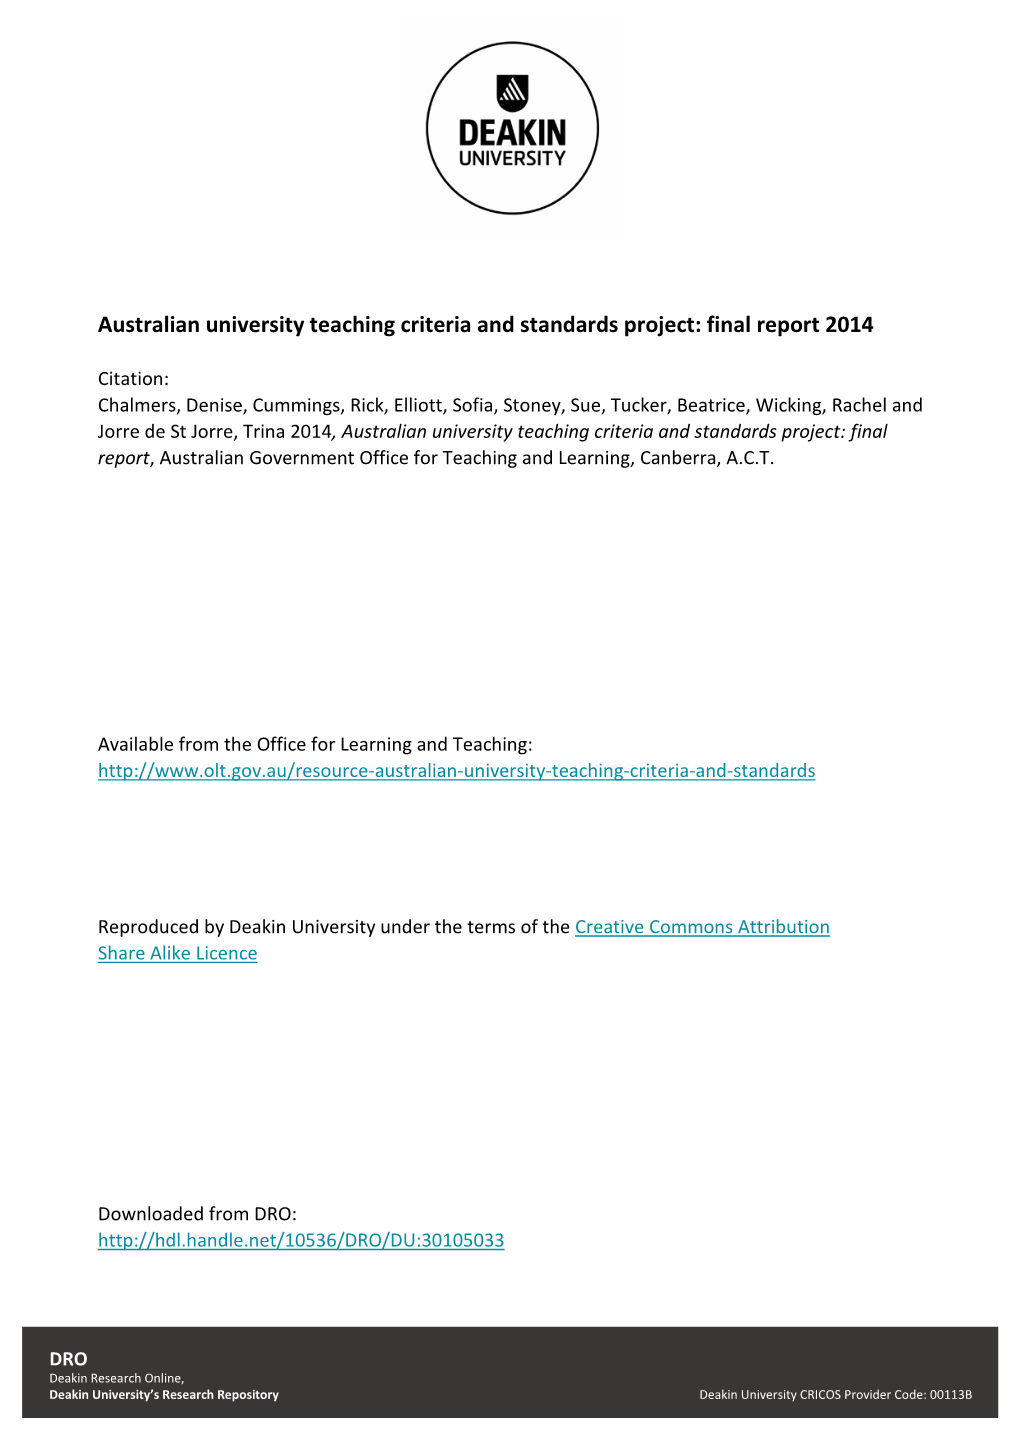 Australian University Teaching Criteria and Standards Project: Final Report 2014